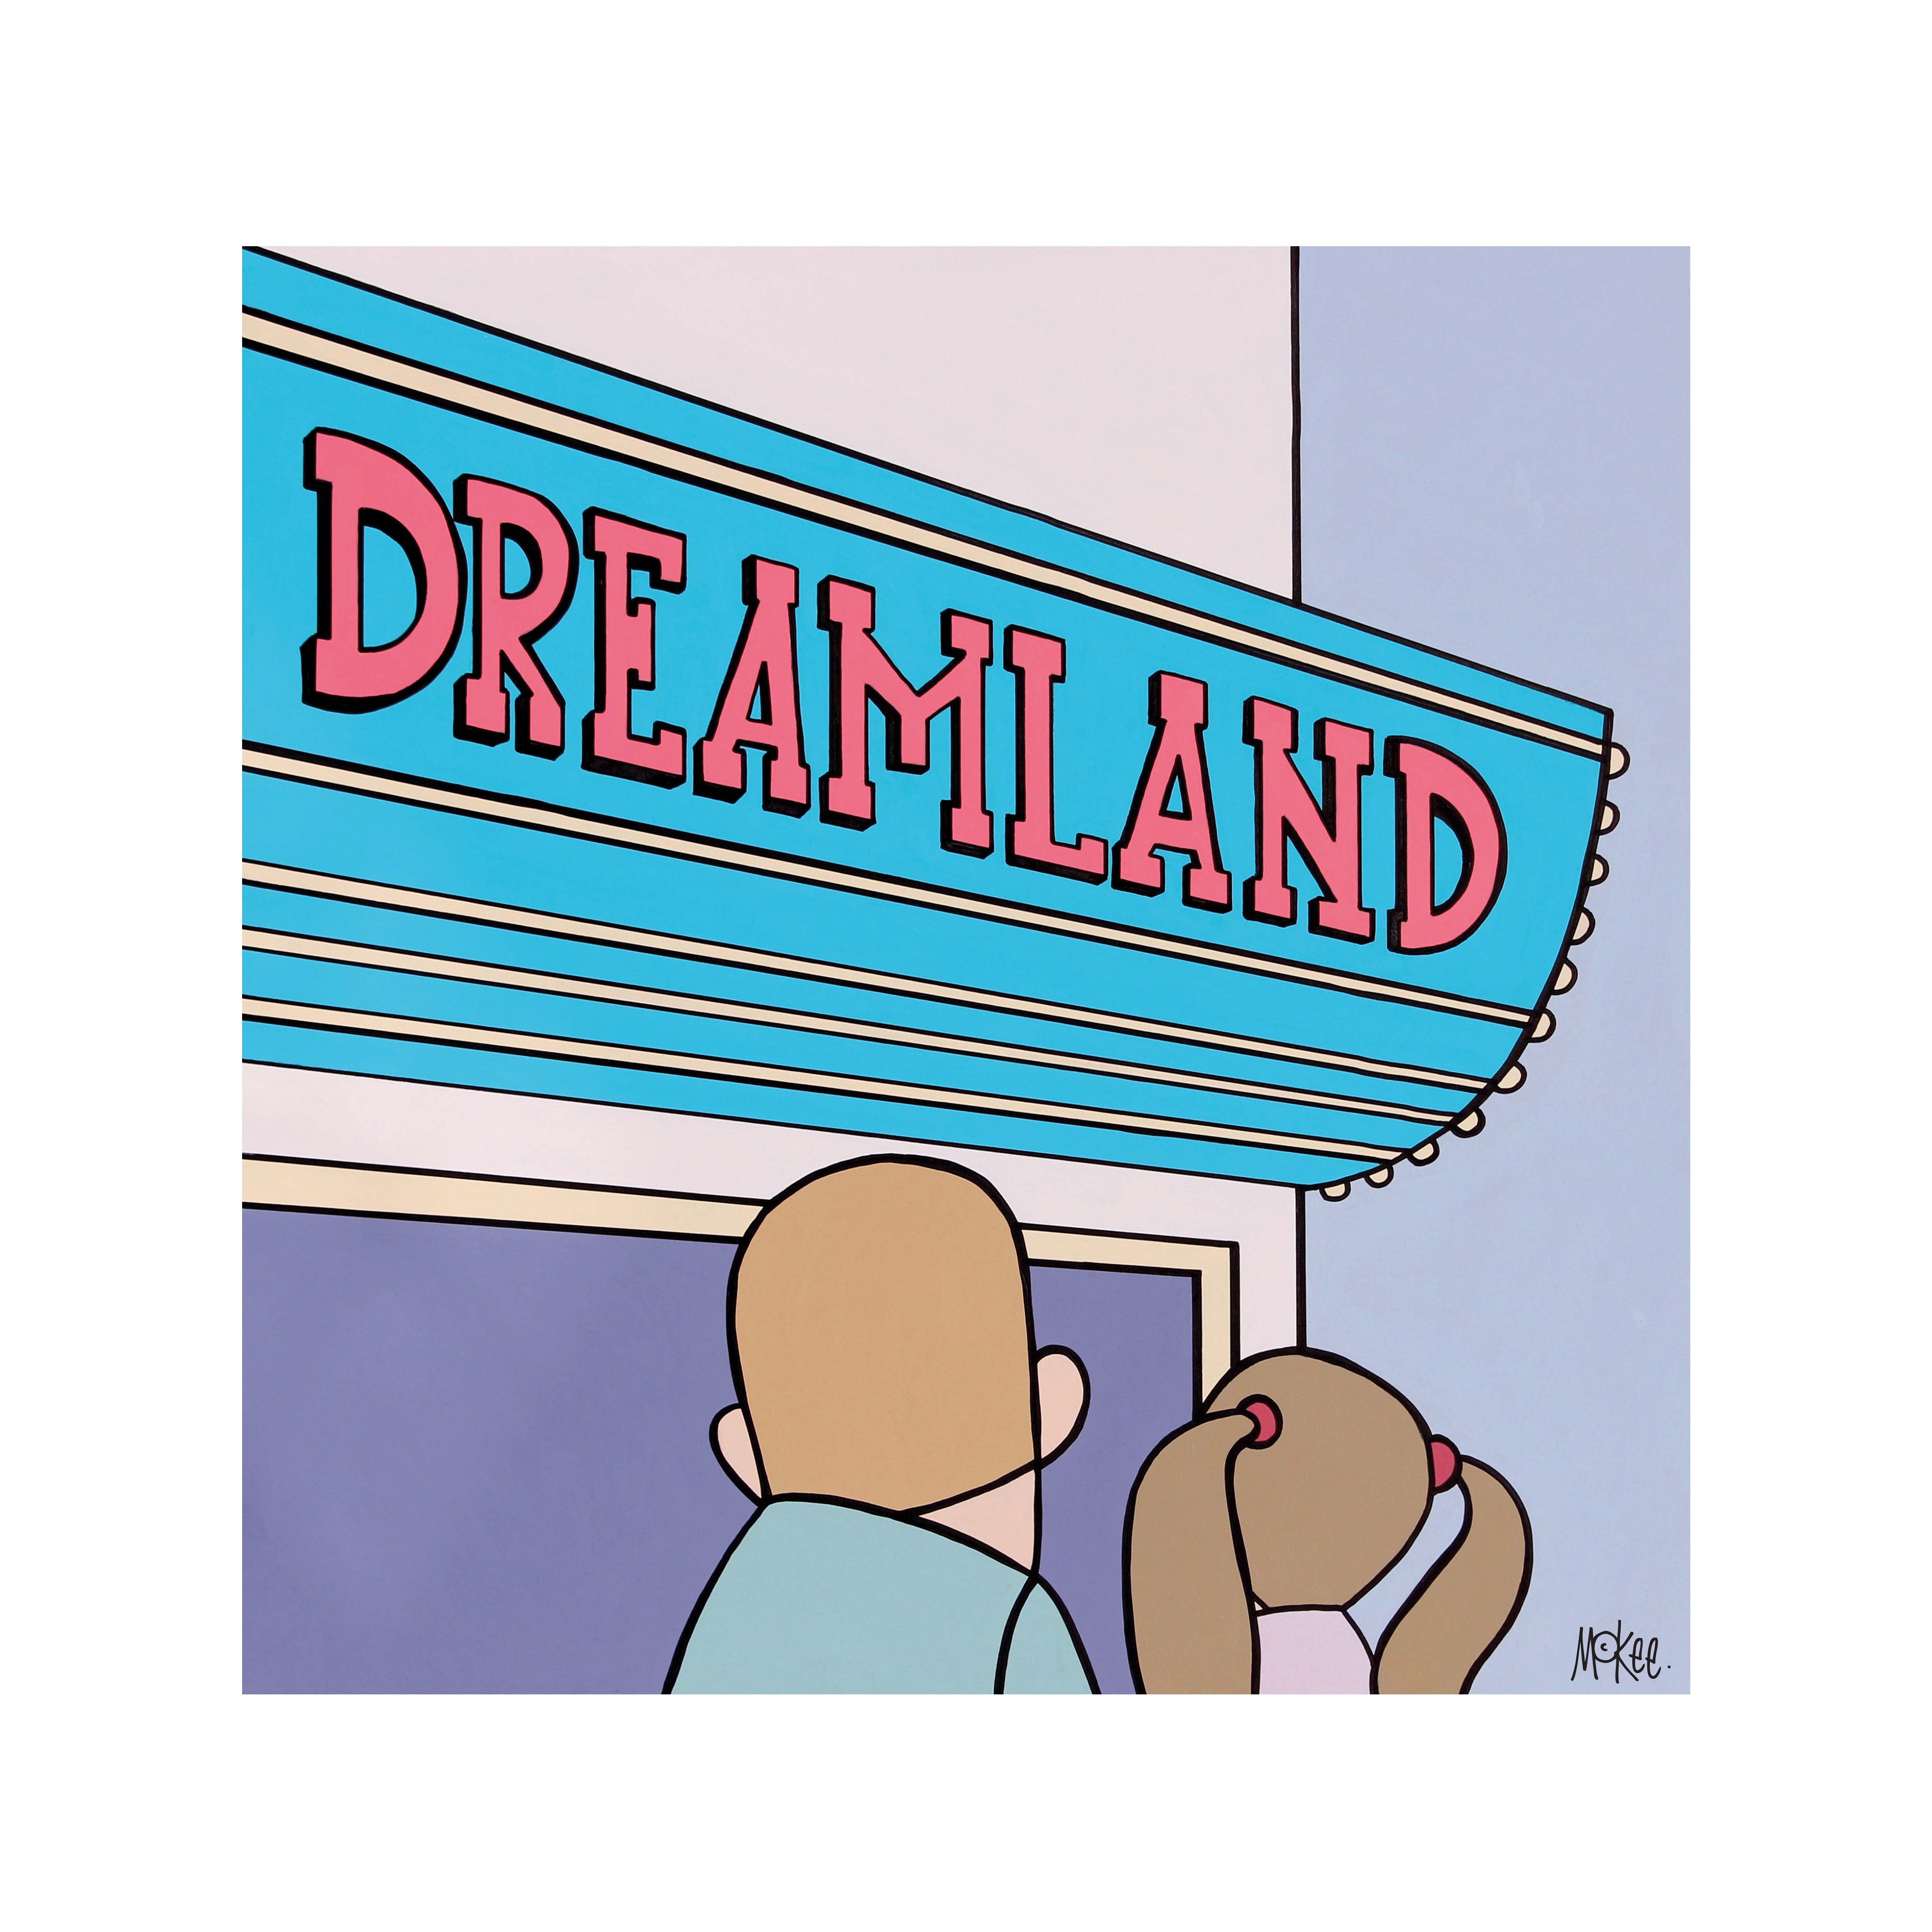 Dreamland